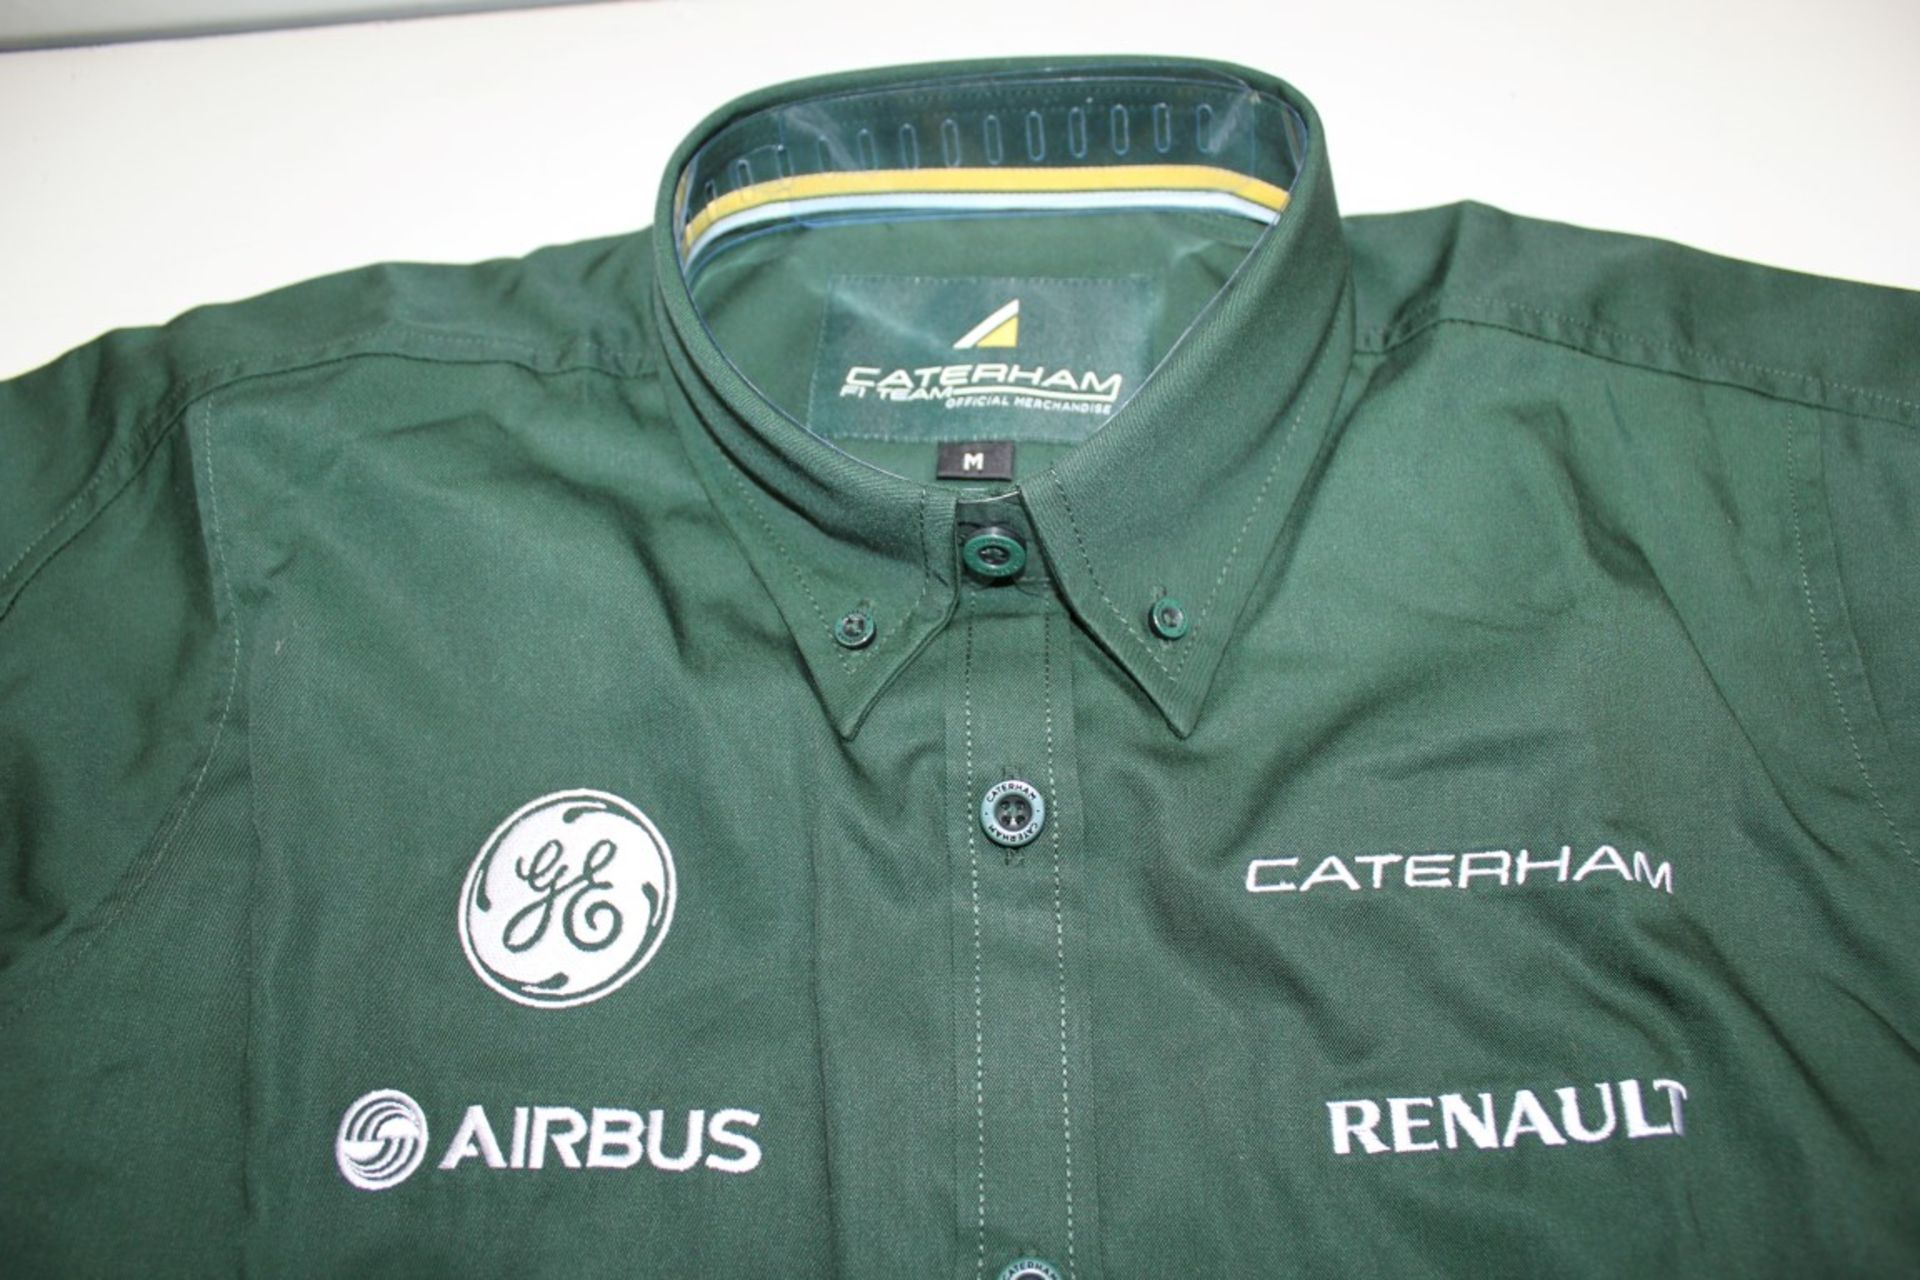 10 x CATERHAM F1 Team Engineer Race Shirts - Short Sleeved - Size: X-Large - Ref: JIM040B - - Image 2 of 3